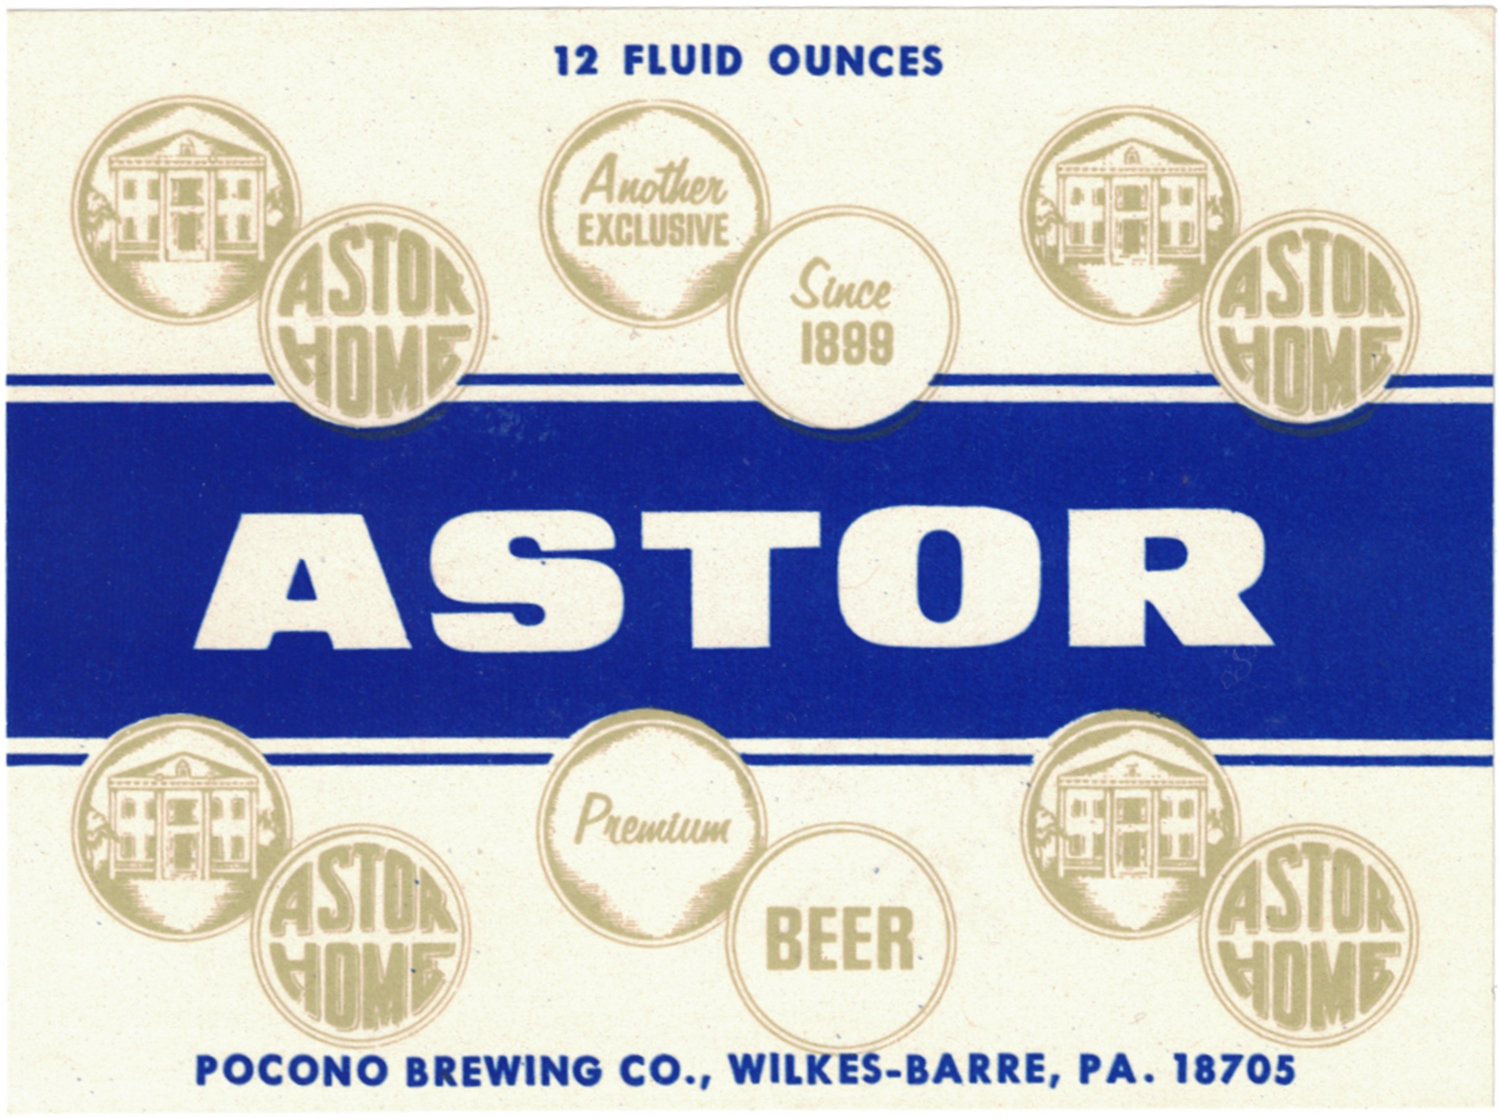 Astor Beer Label